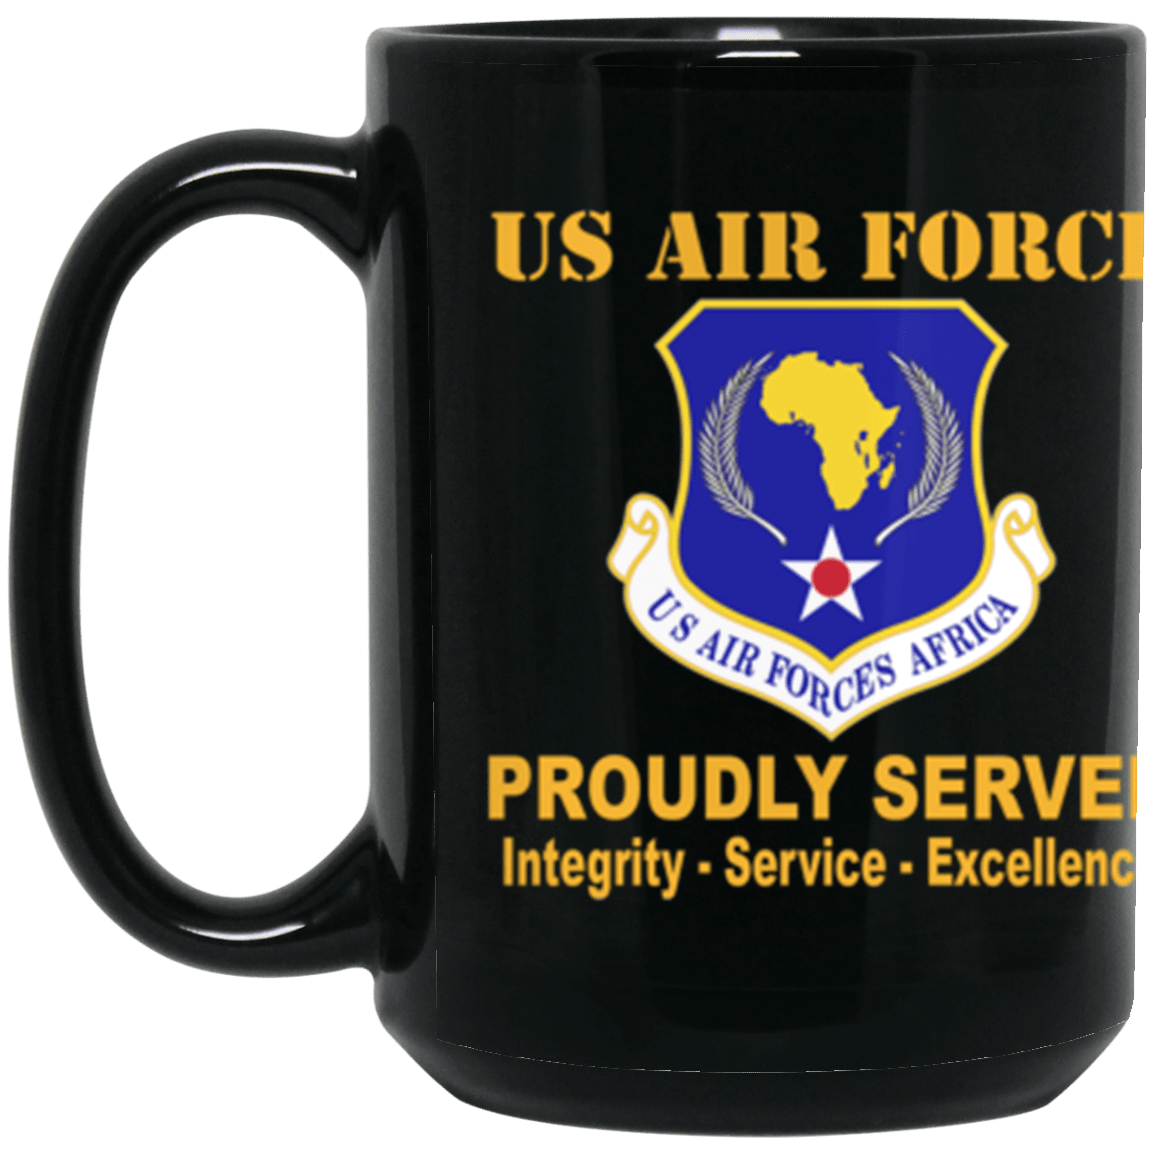 United States Air Forces in Europe Proudly Served Core Values 15 oz. Black Mug-Mug-USAF-Veterans Nation